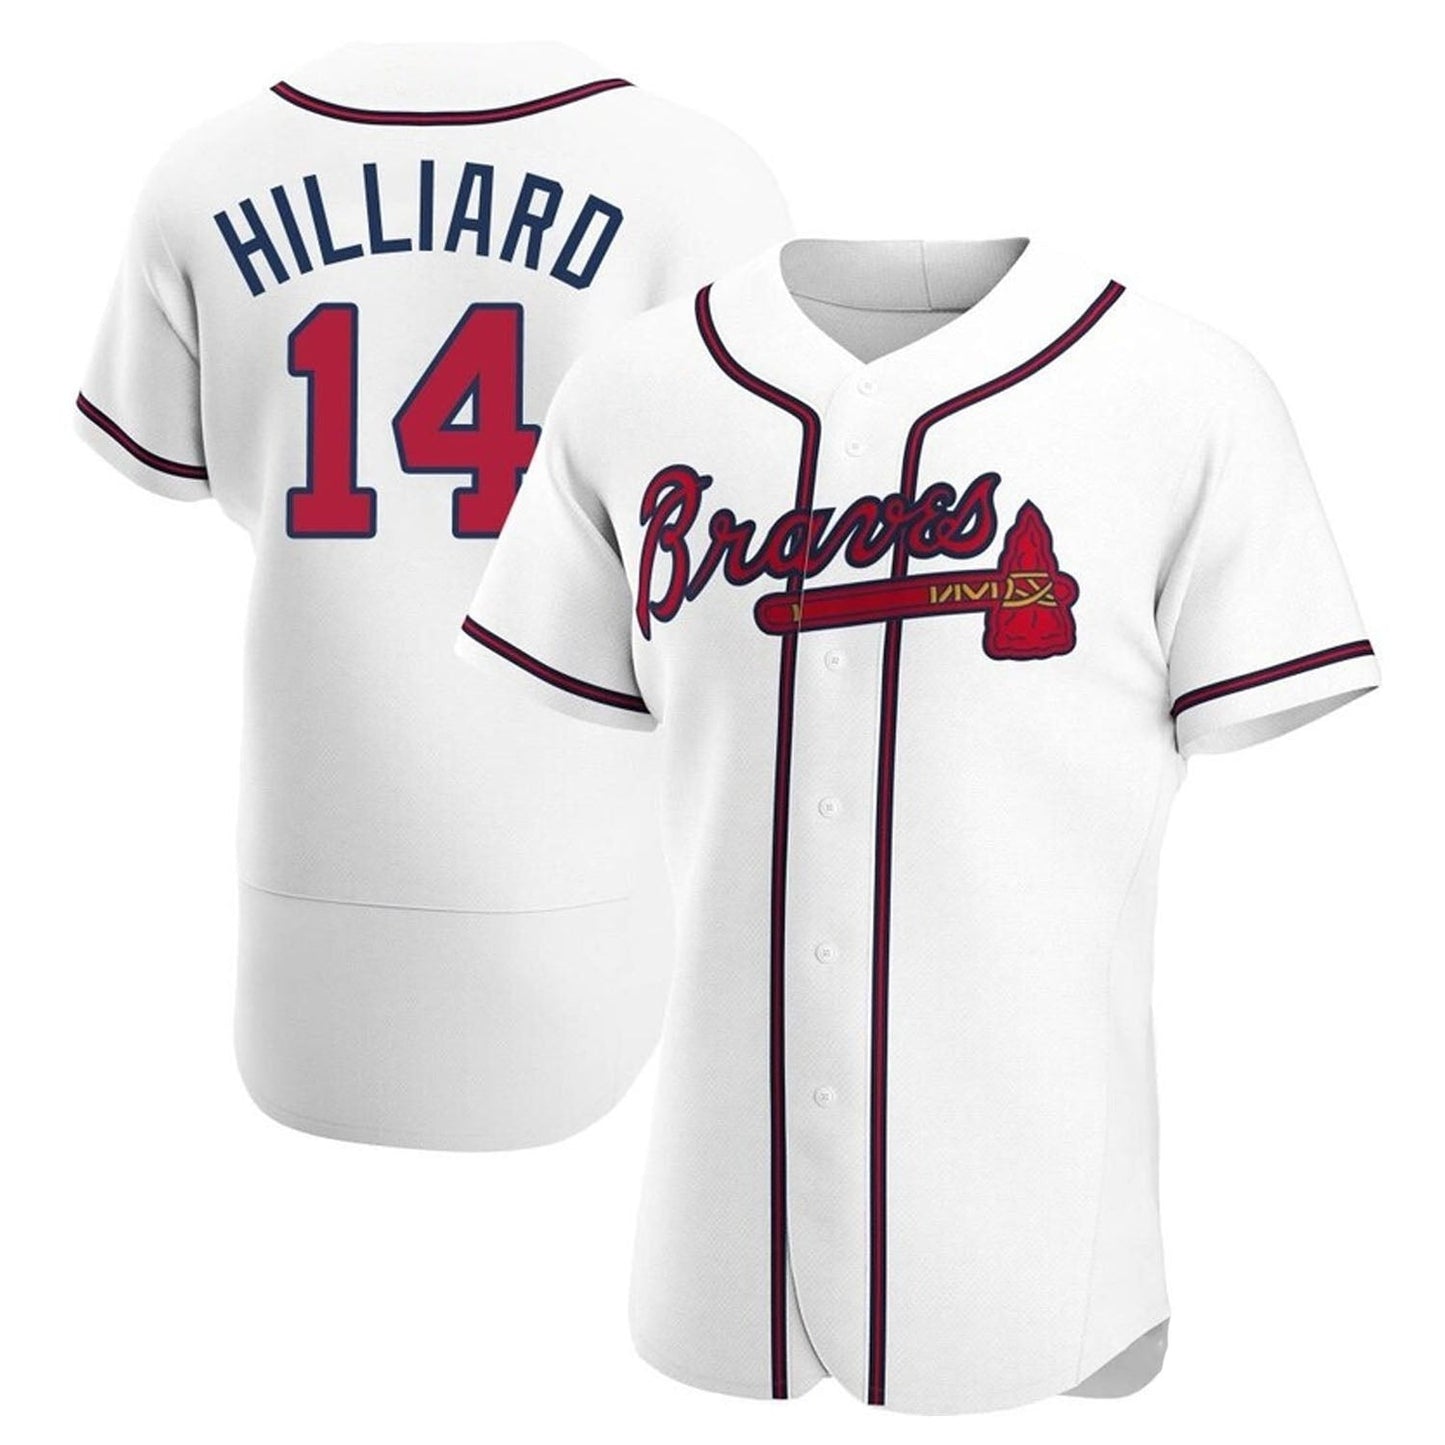 MLB Sam Hilliard Atlanta Braves 14 Jersey